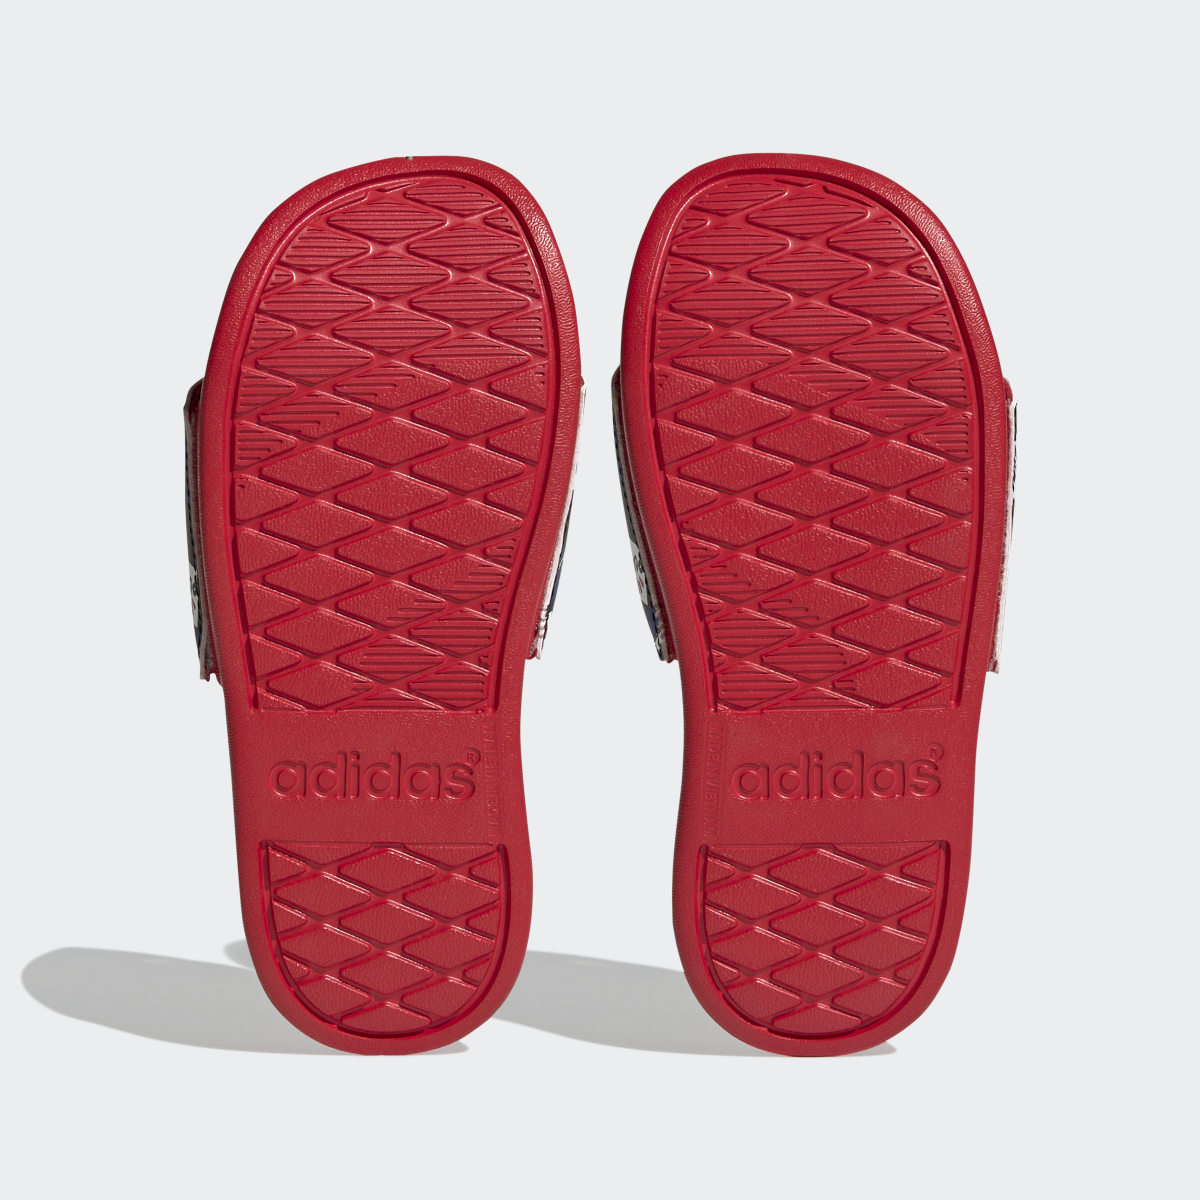 Adidas Sandalias adidas x Disney Adilette Comfort Hombre Araña. 4